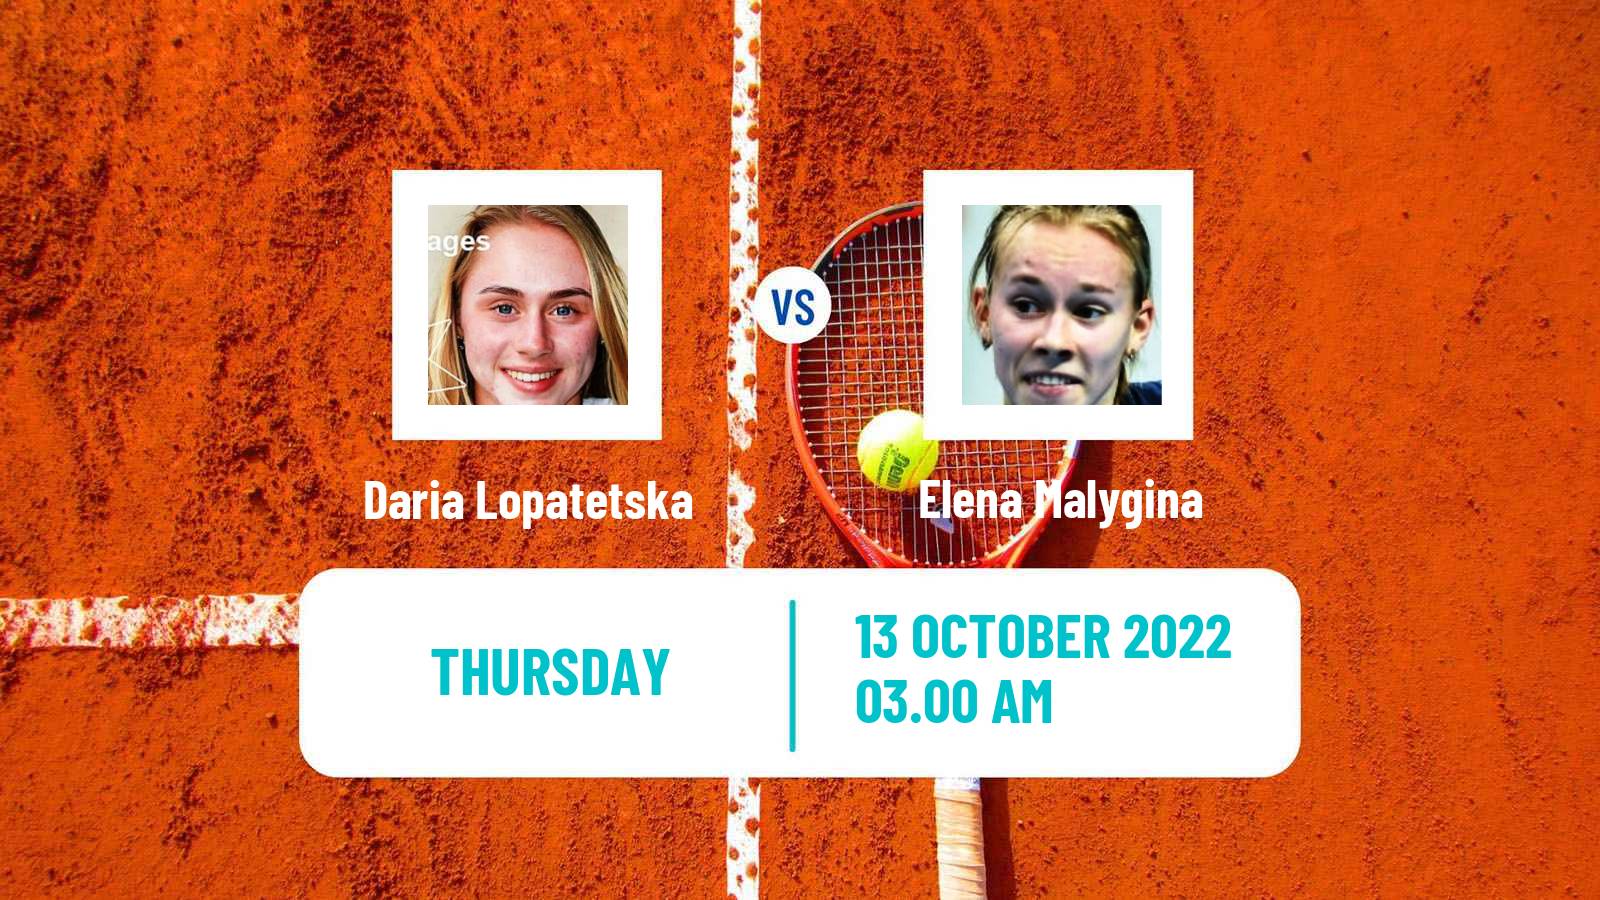 Tennis ITF Tournaments Daria Lopatetska - Elena Malygina